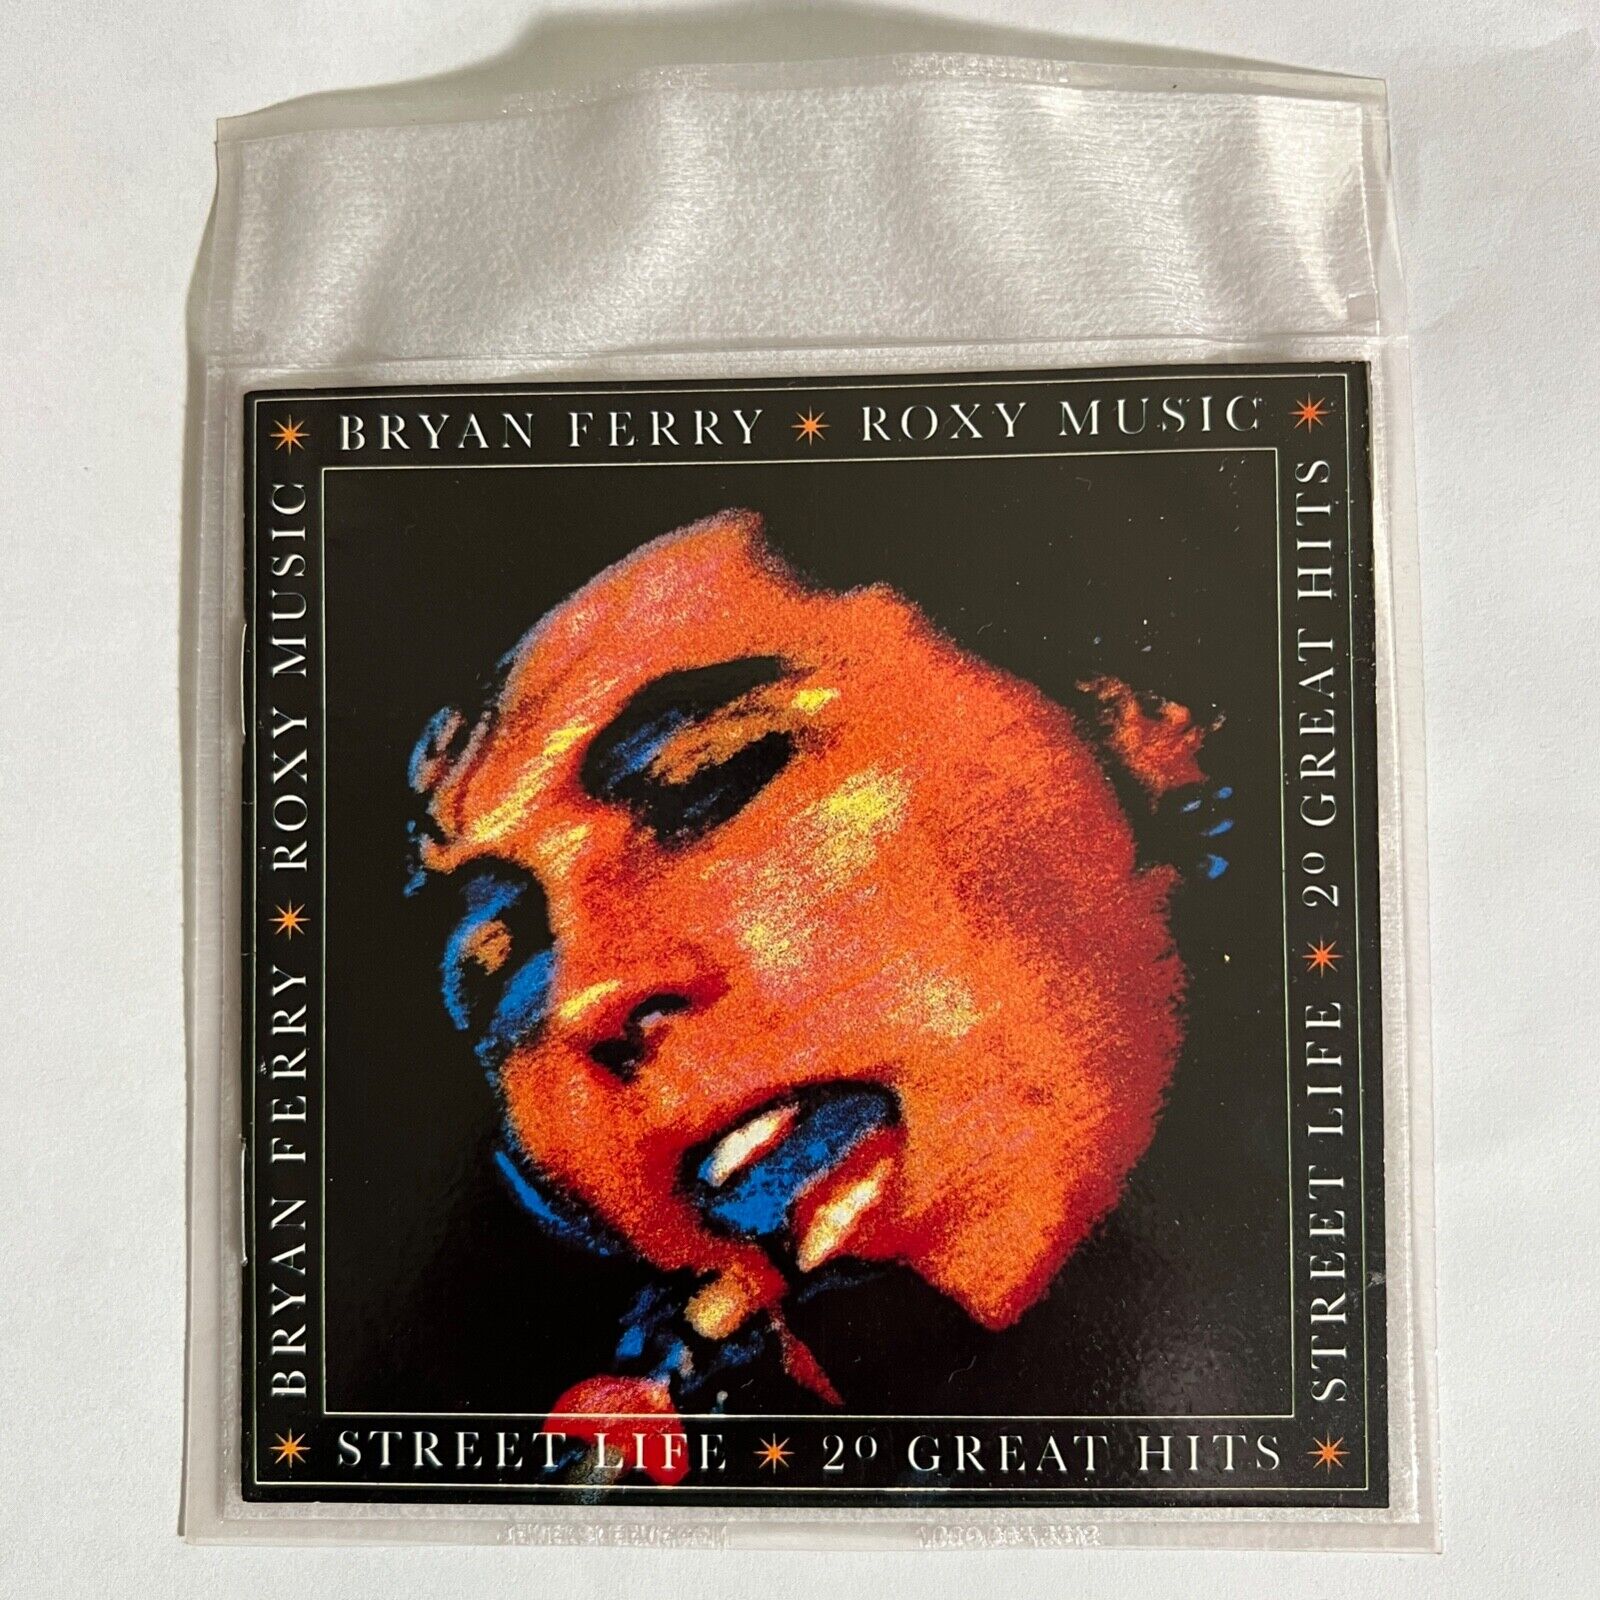 Bryan Ferry - Roxy Music CD with vinyl sleeve